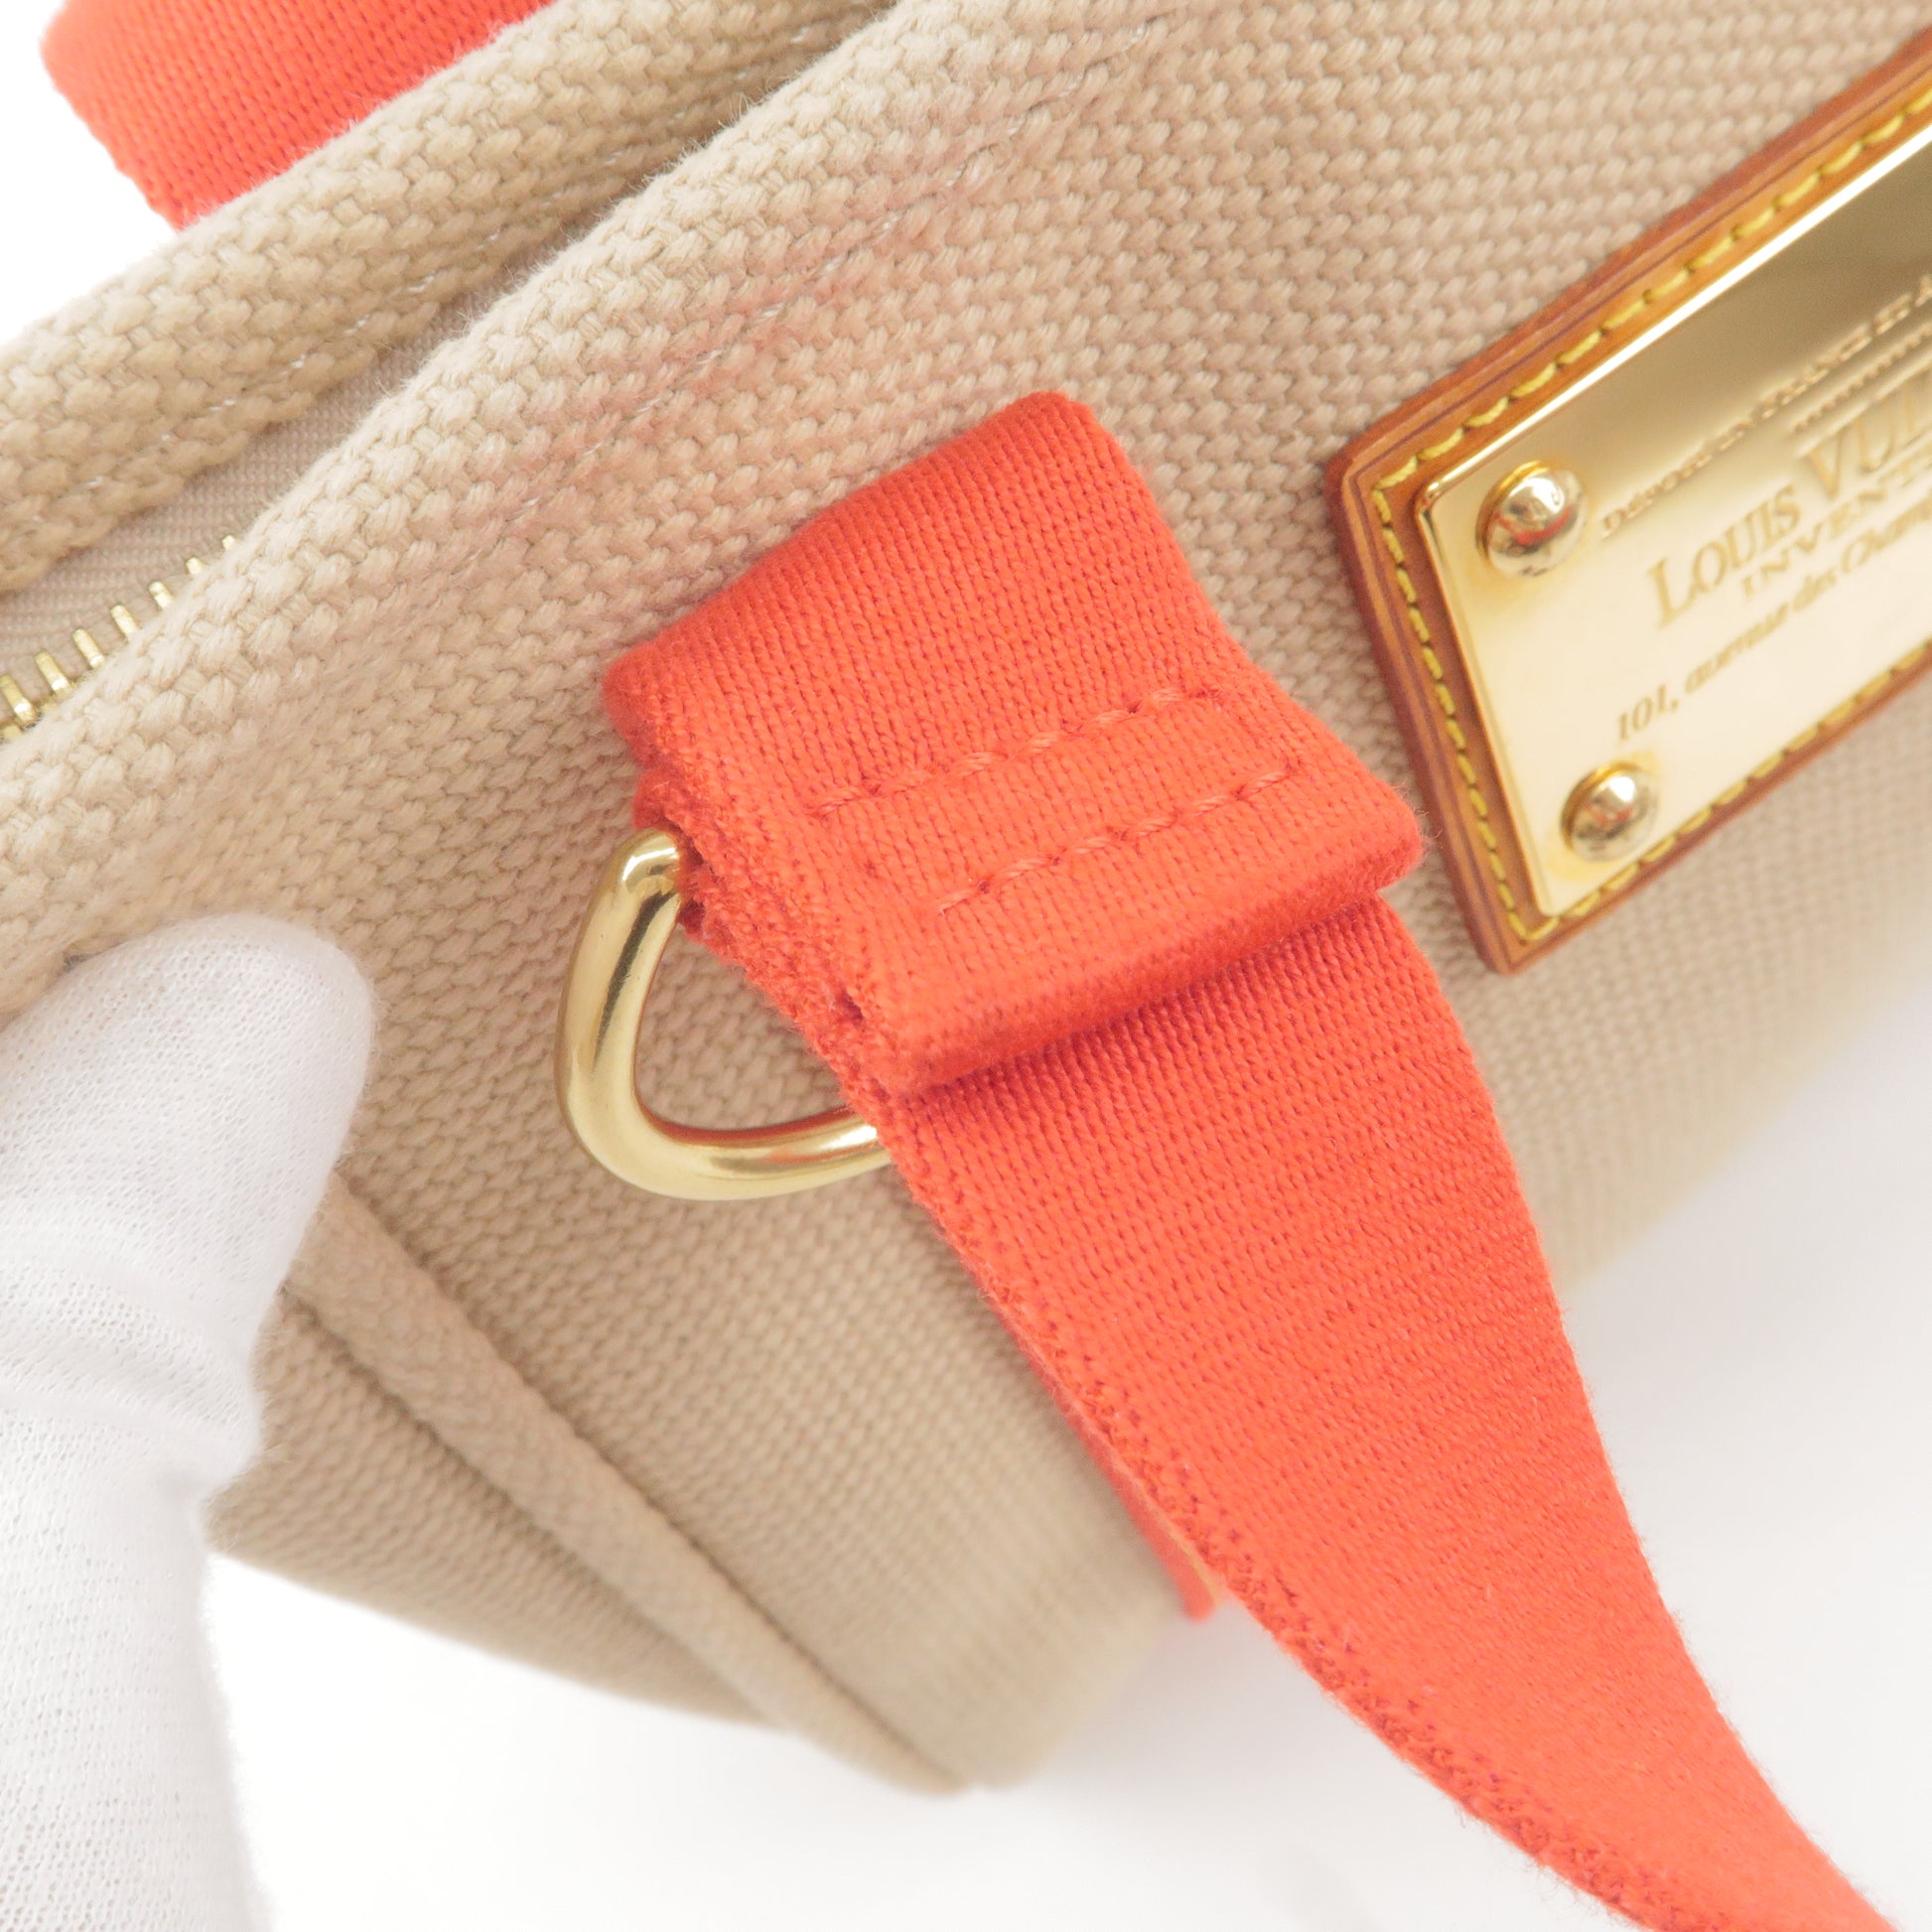 Louis-Vuitton-Antigua-Cabas-PM-Tote-Bag-Hand-Bag-Rose-M40088 – dct